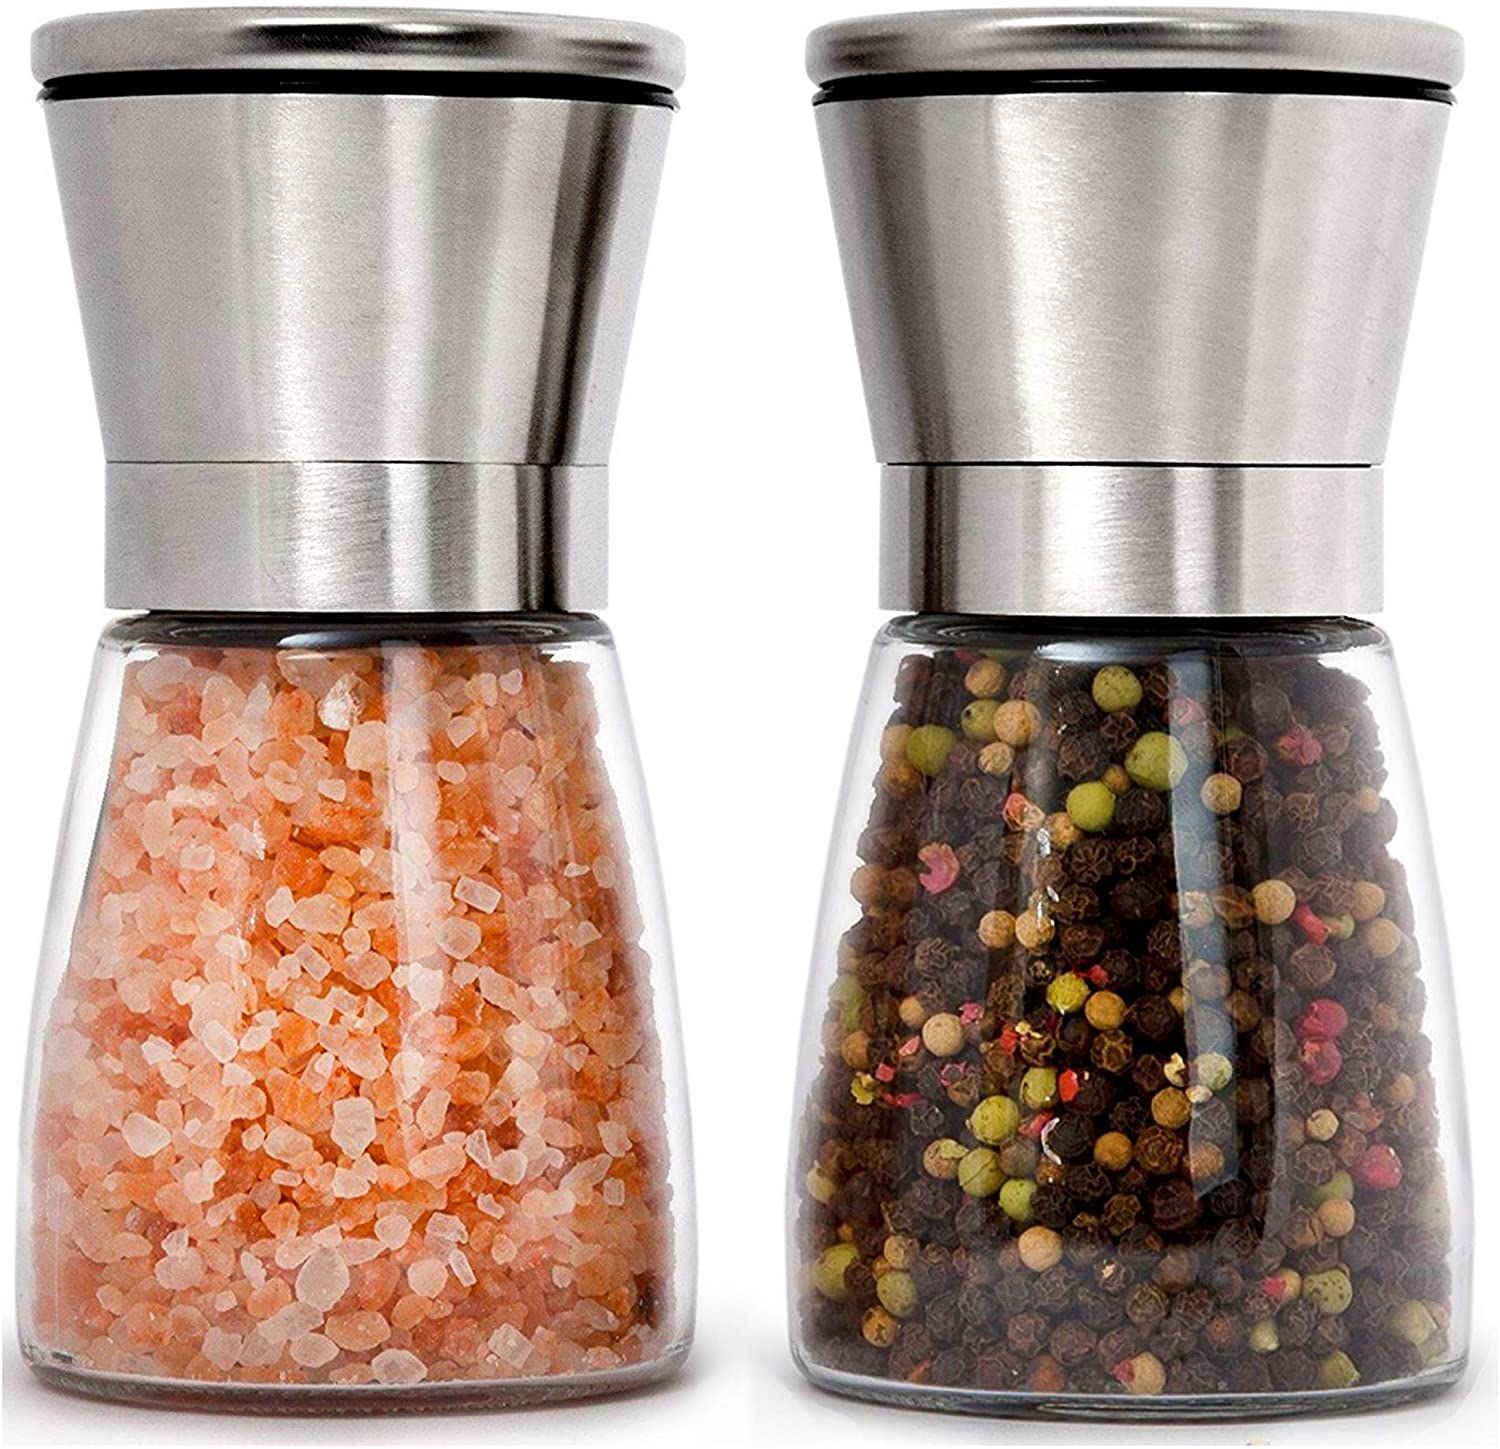 https://www.dontwasteyourmoney.com/wp-content/uploads/2022/01/home-ec-manual-bpa-free-salt-and-pepper-grinder-set-salt-and-pepper-grinder-set.jpg